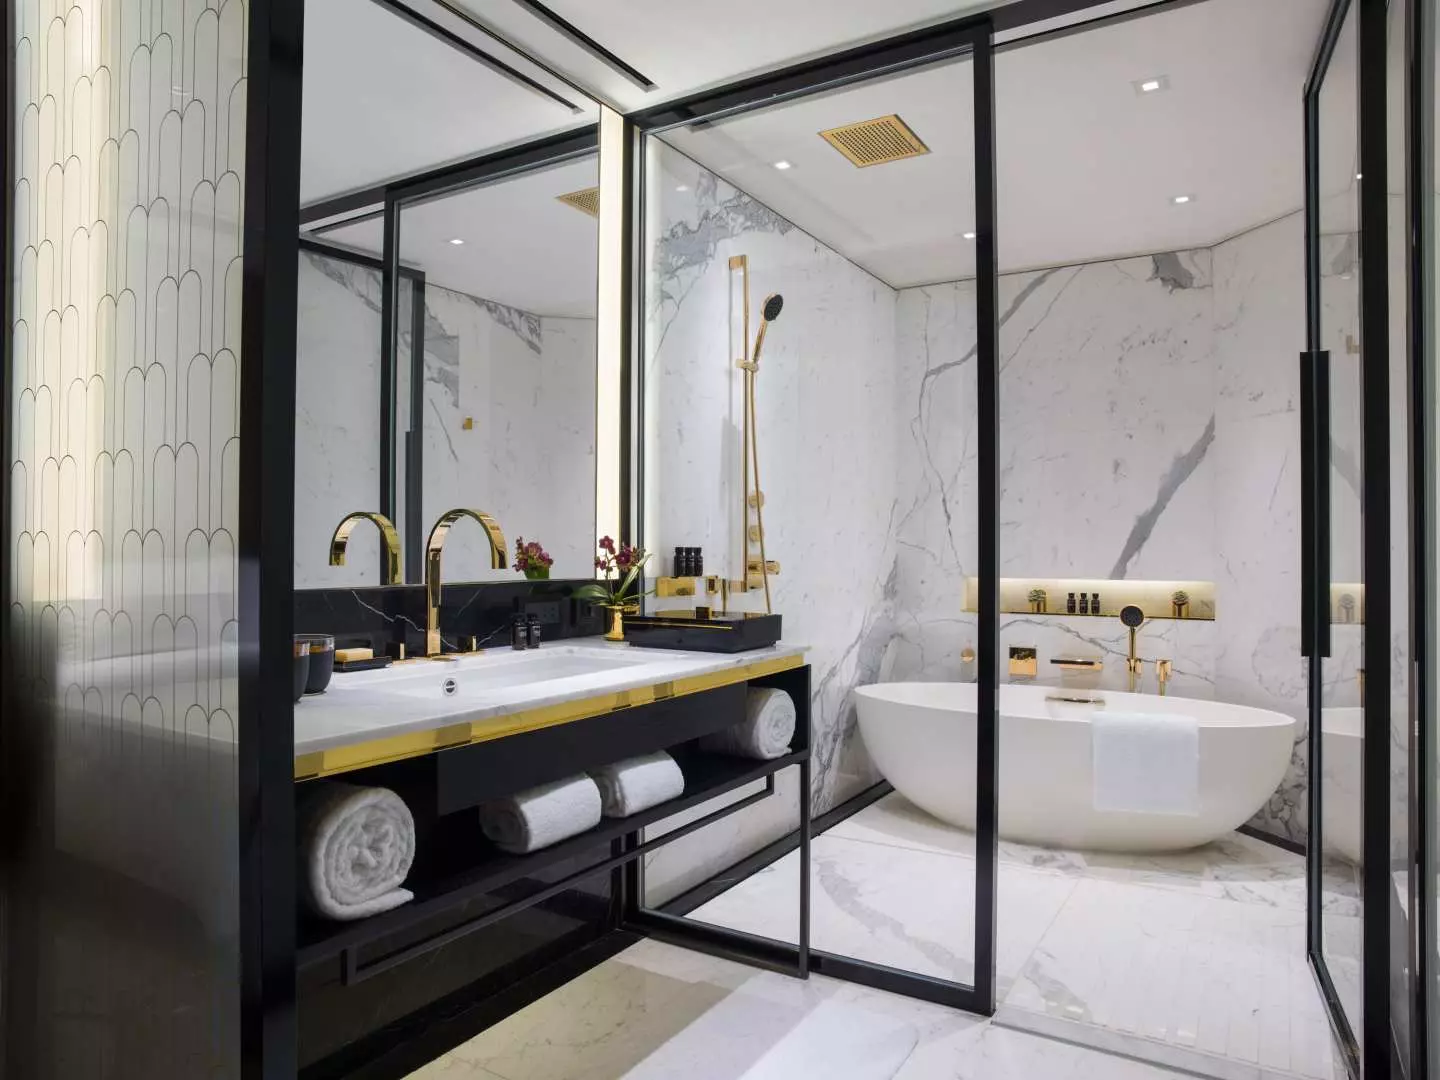 The Murray香港美利酒店N2 Grand奢華浴室設施